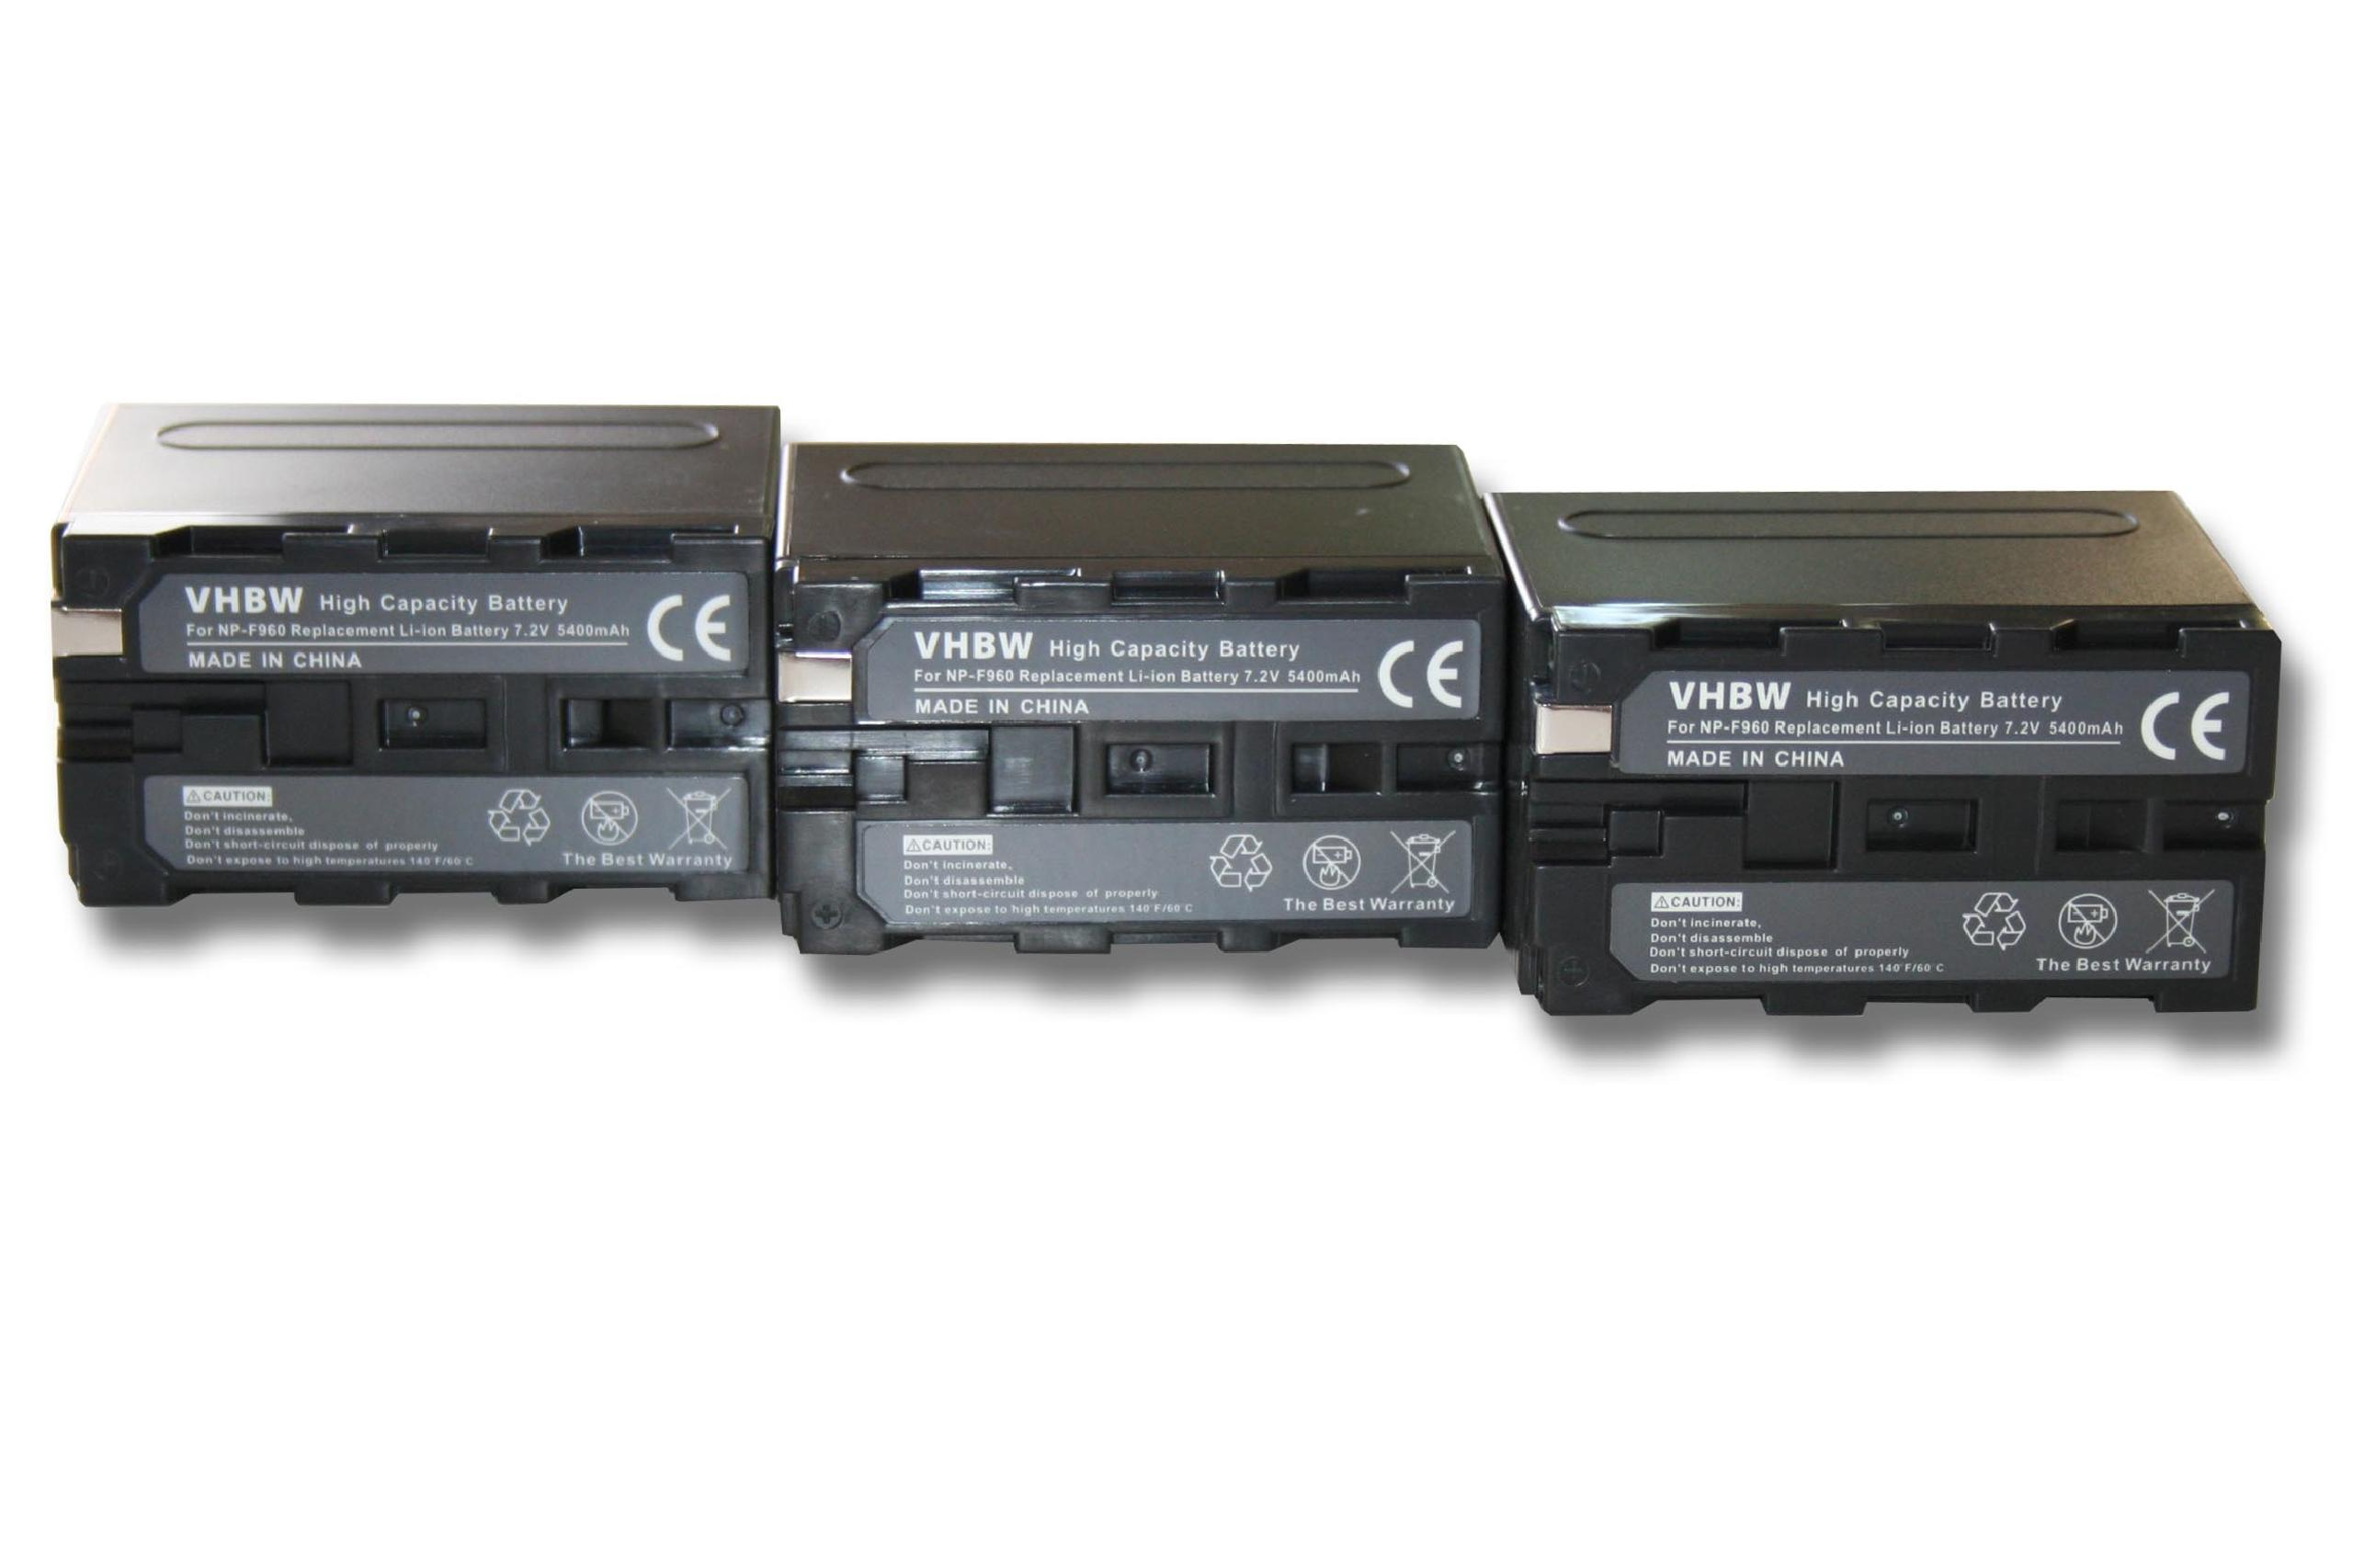 VHBW kompatibel mit Sony CCD-TRV517, CCD-TRV51 6000 Volt, CCD-TRV46, CCD-TRV41, 7.2 Videokamera, Li-Ion CCD-TRV43, Akku CCD-TRV4, 